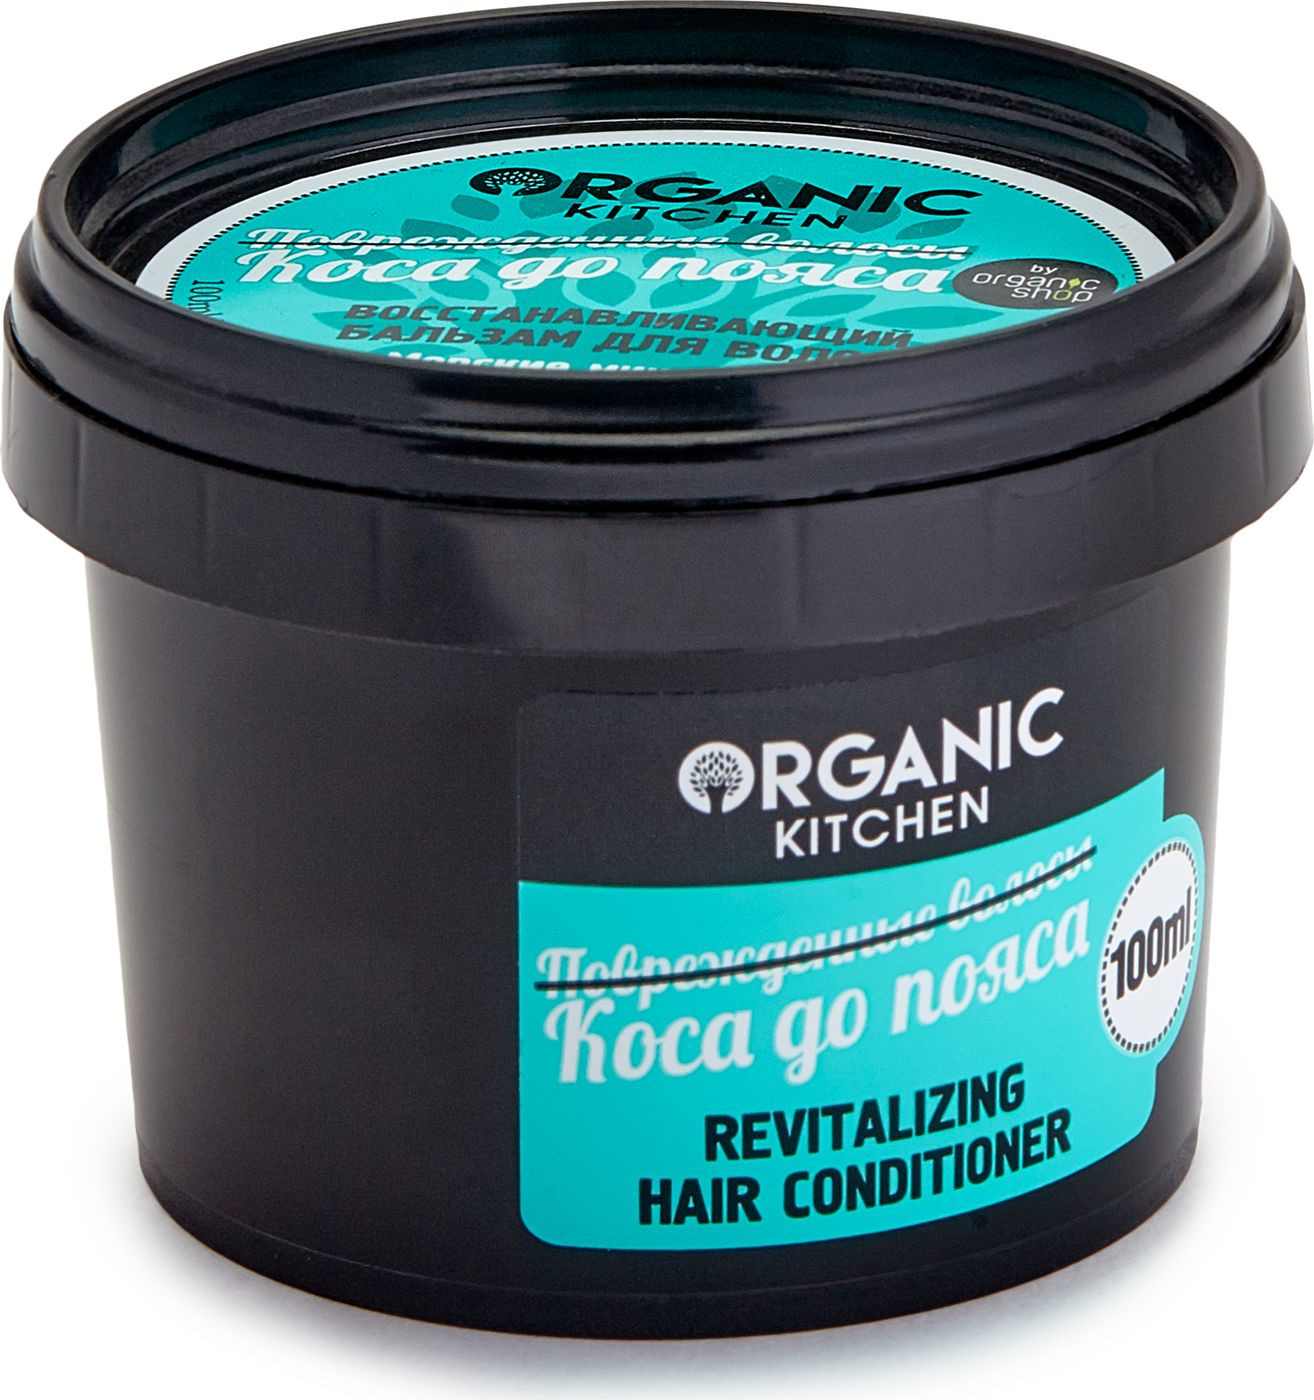 фото Органик Шоп Китчен Восстанавливающий бальзам для волос "Коса до пояса", 100 мл Organic shop